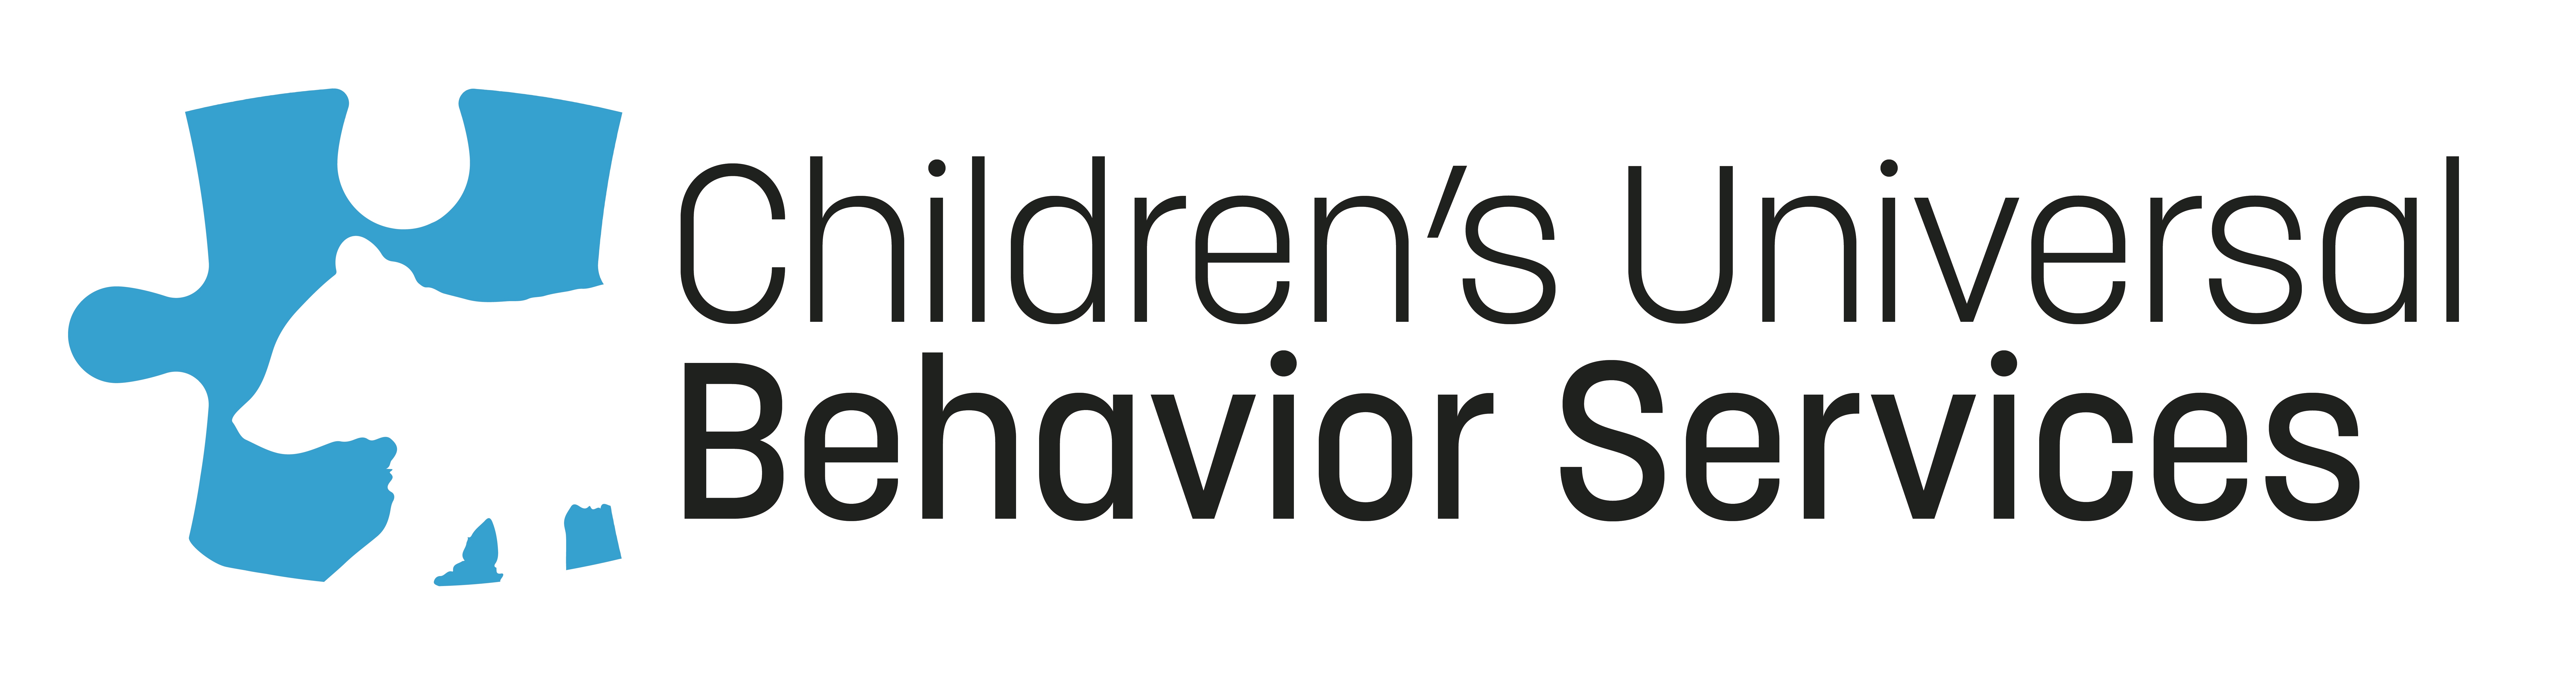 *Service Provider Sponsors* [Children's Universal Behavioral Services]